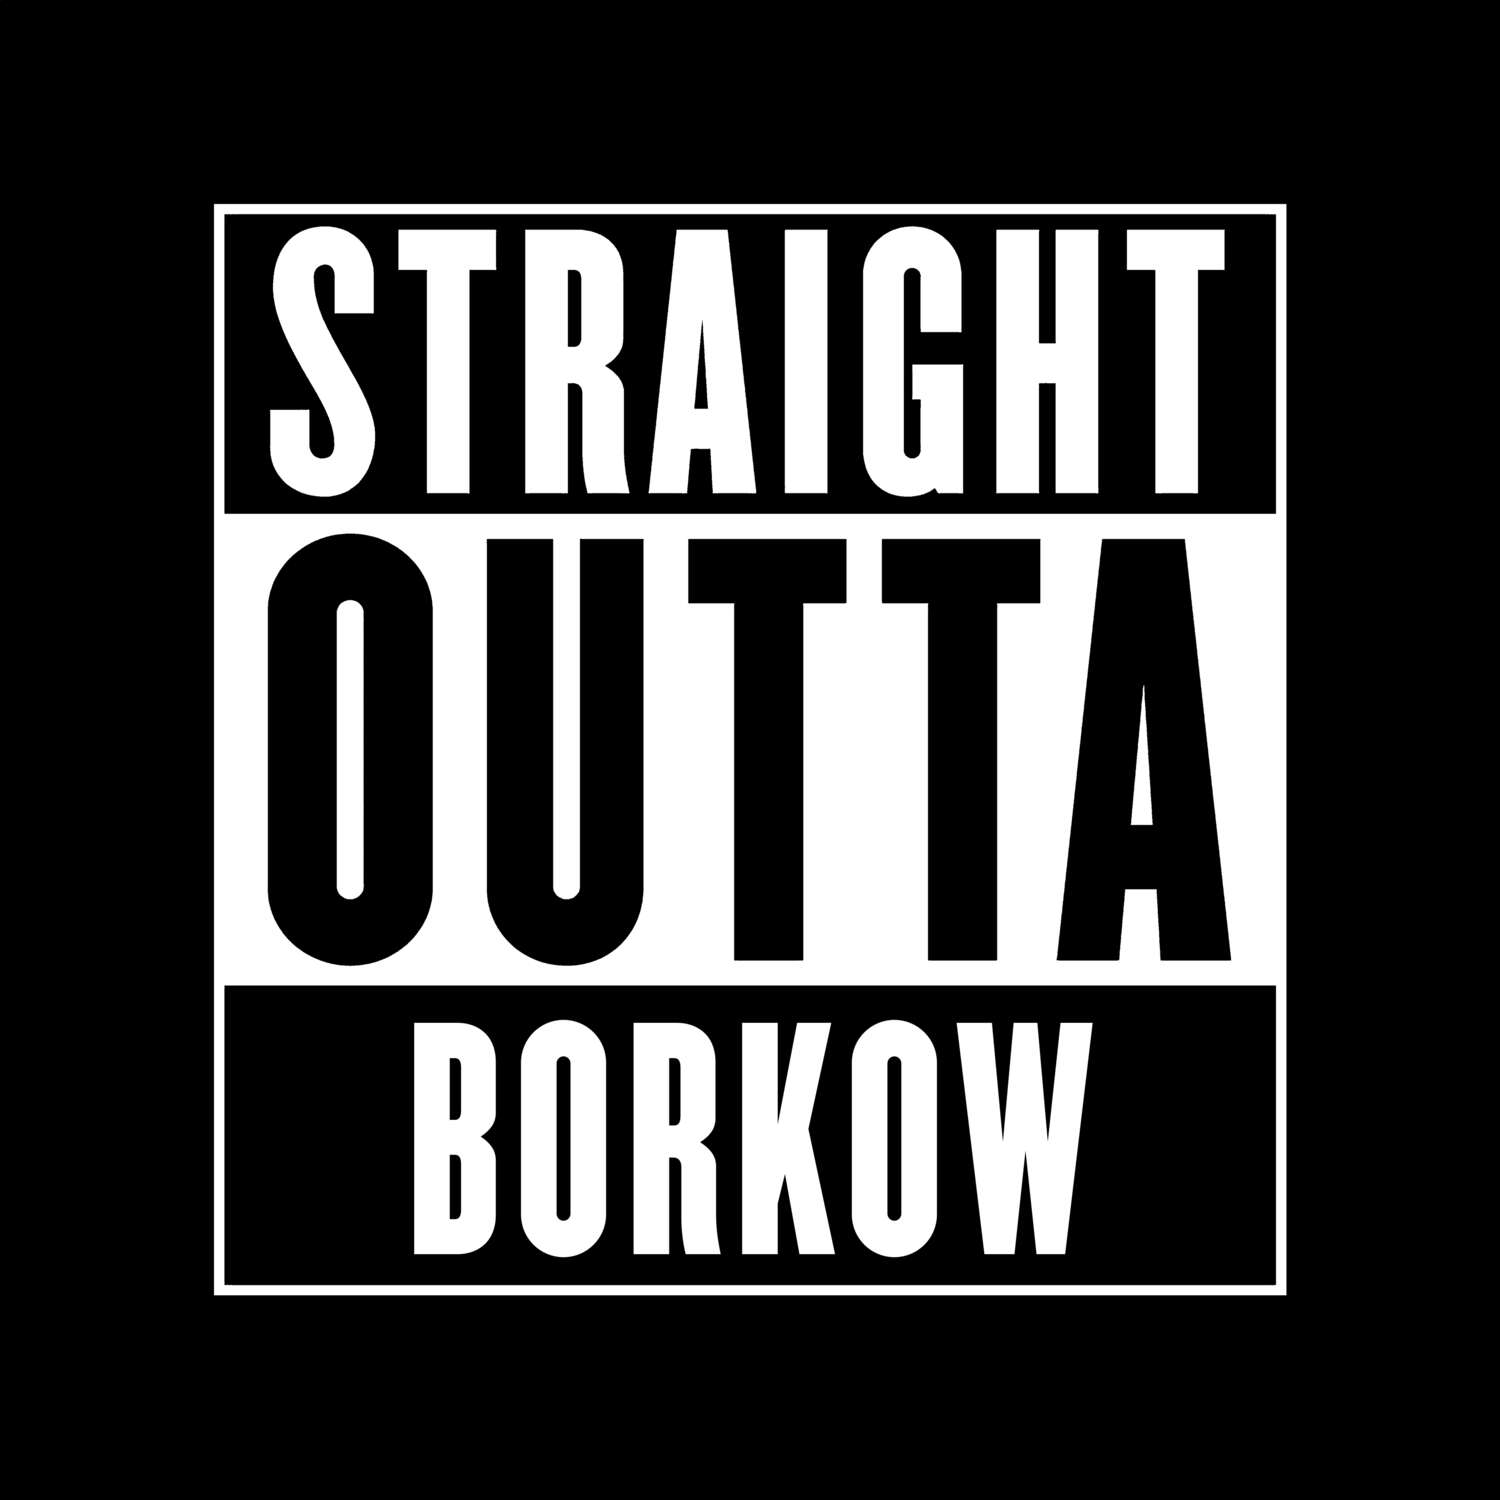 Borkow T-Shirt »Straight Outta«